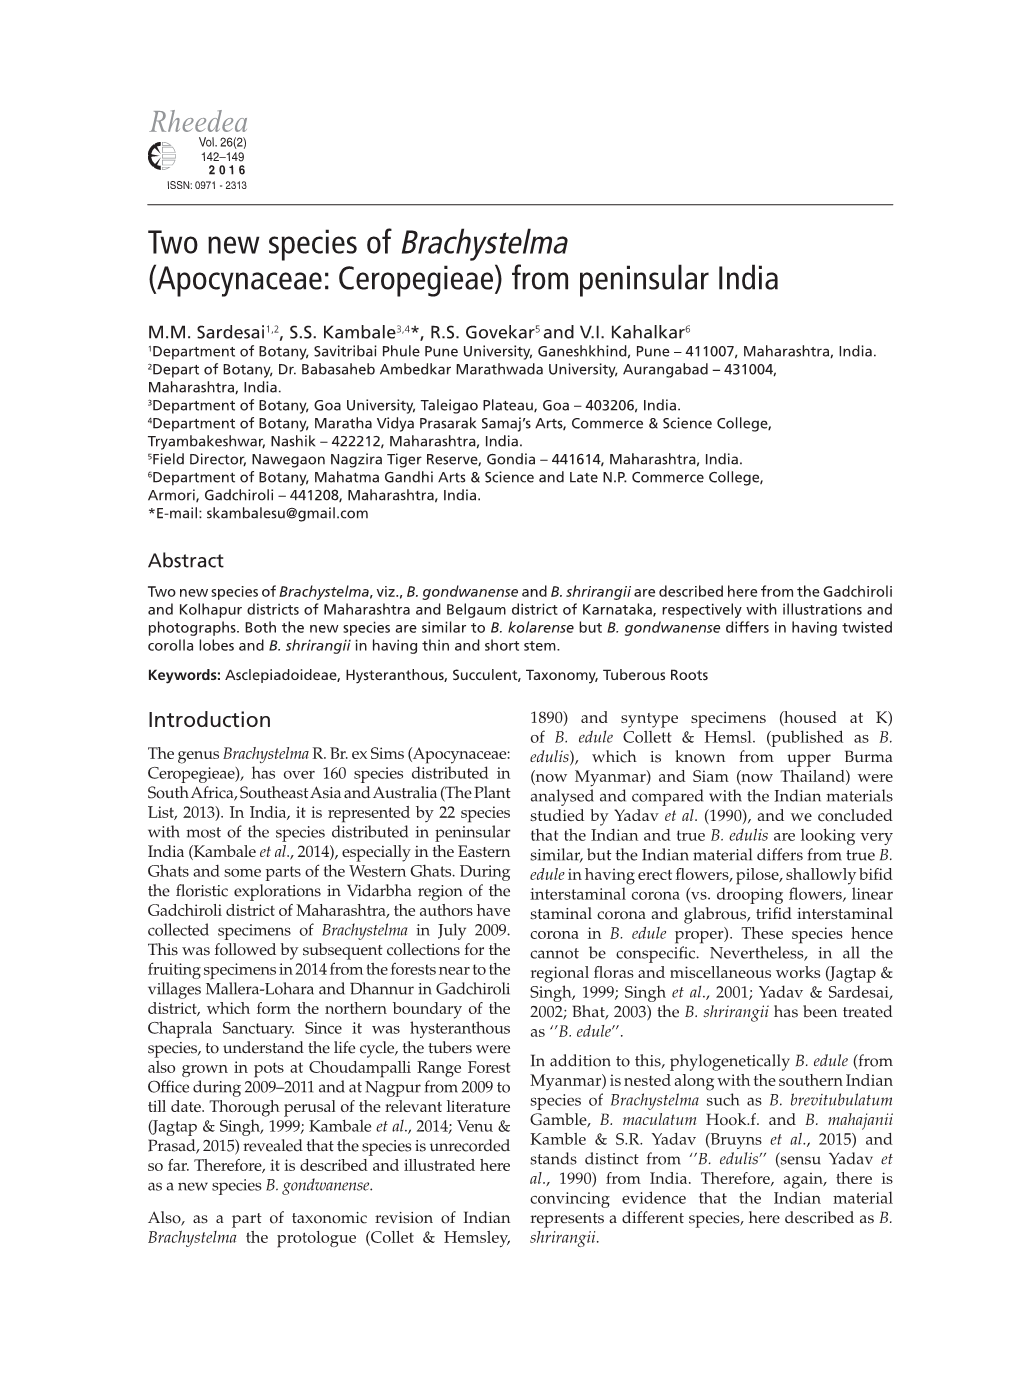 Two New Species of Brachystelma (Apocynaceae: Ceropegieae) from Peninsular India